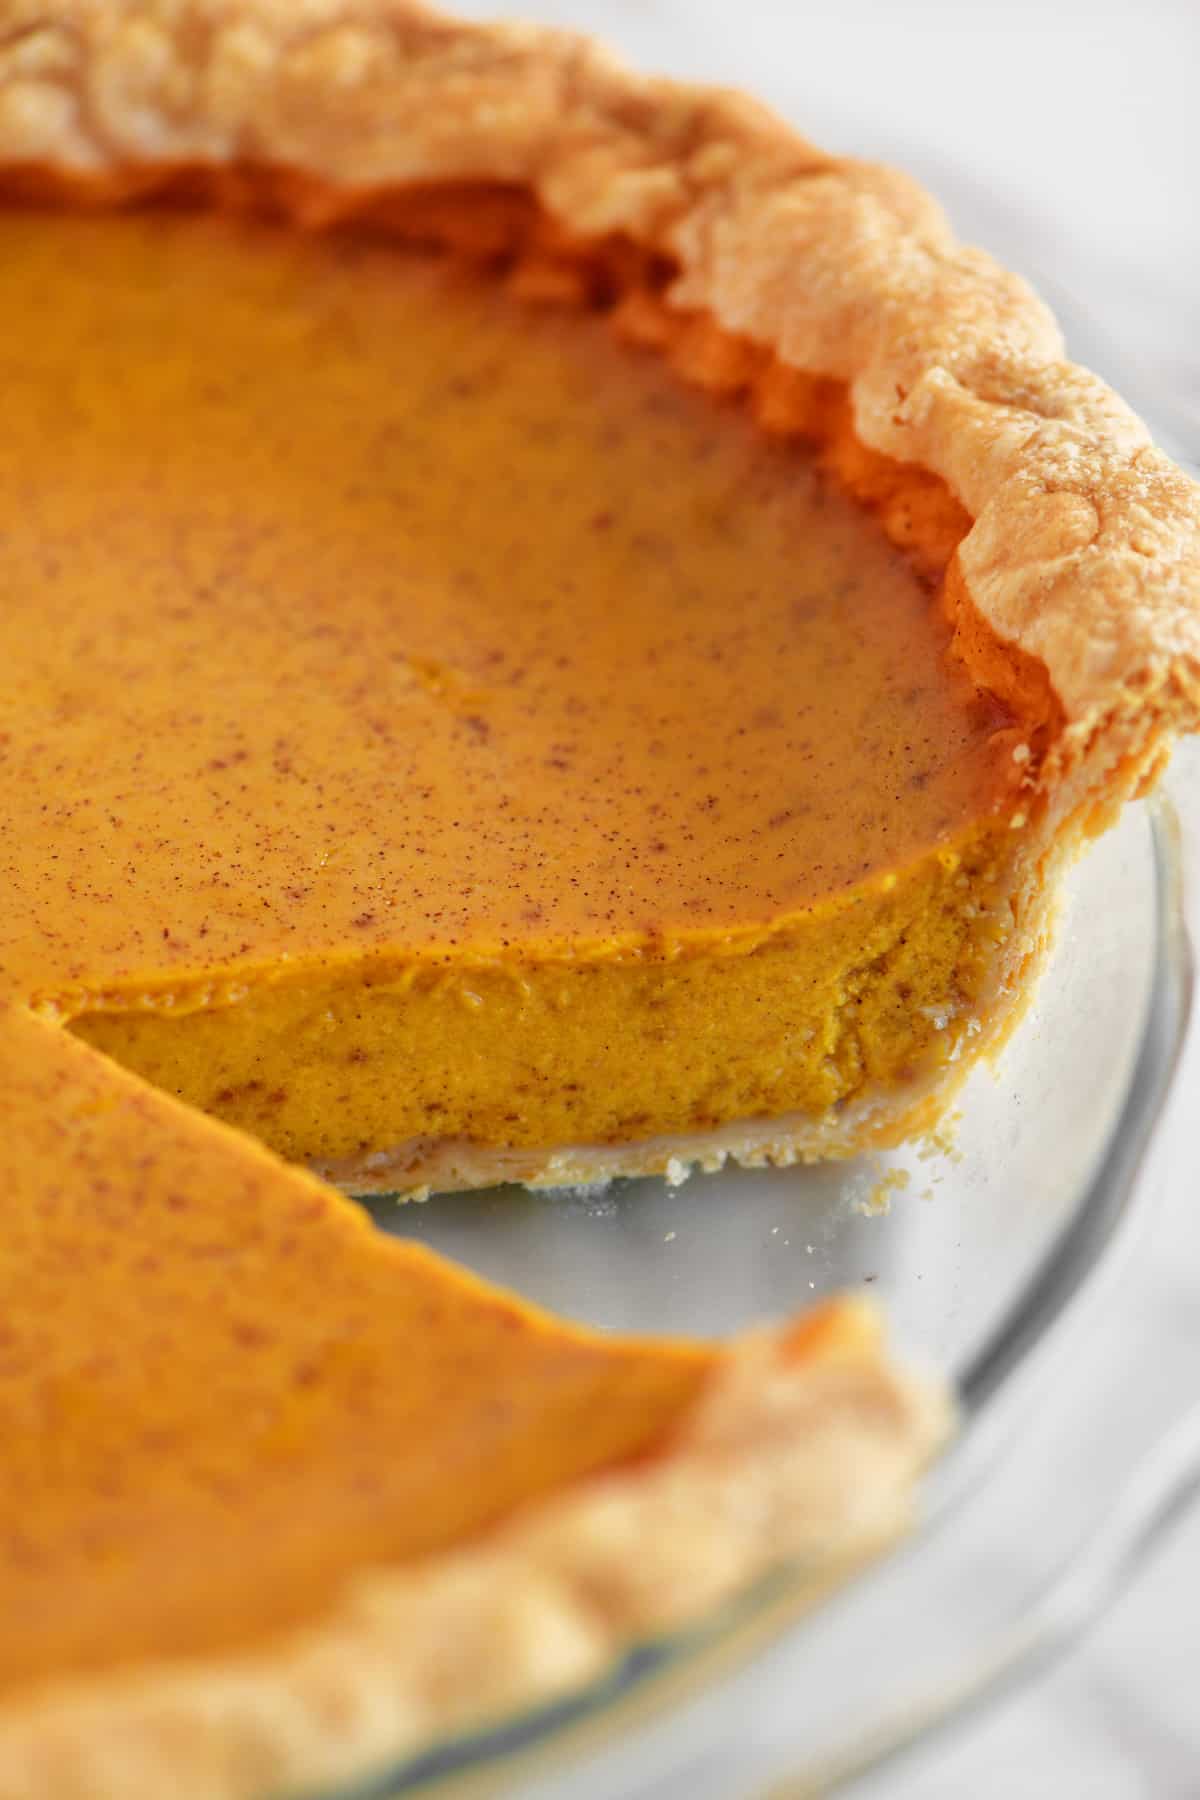 a close-up view of the pumpkin pie